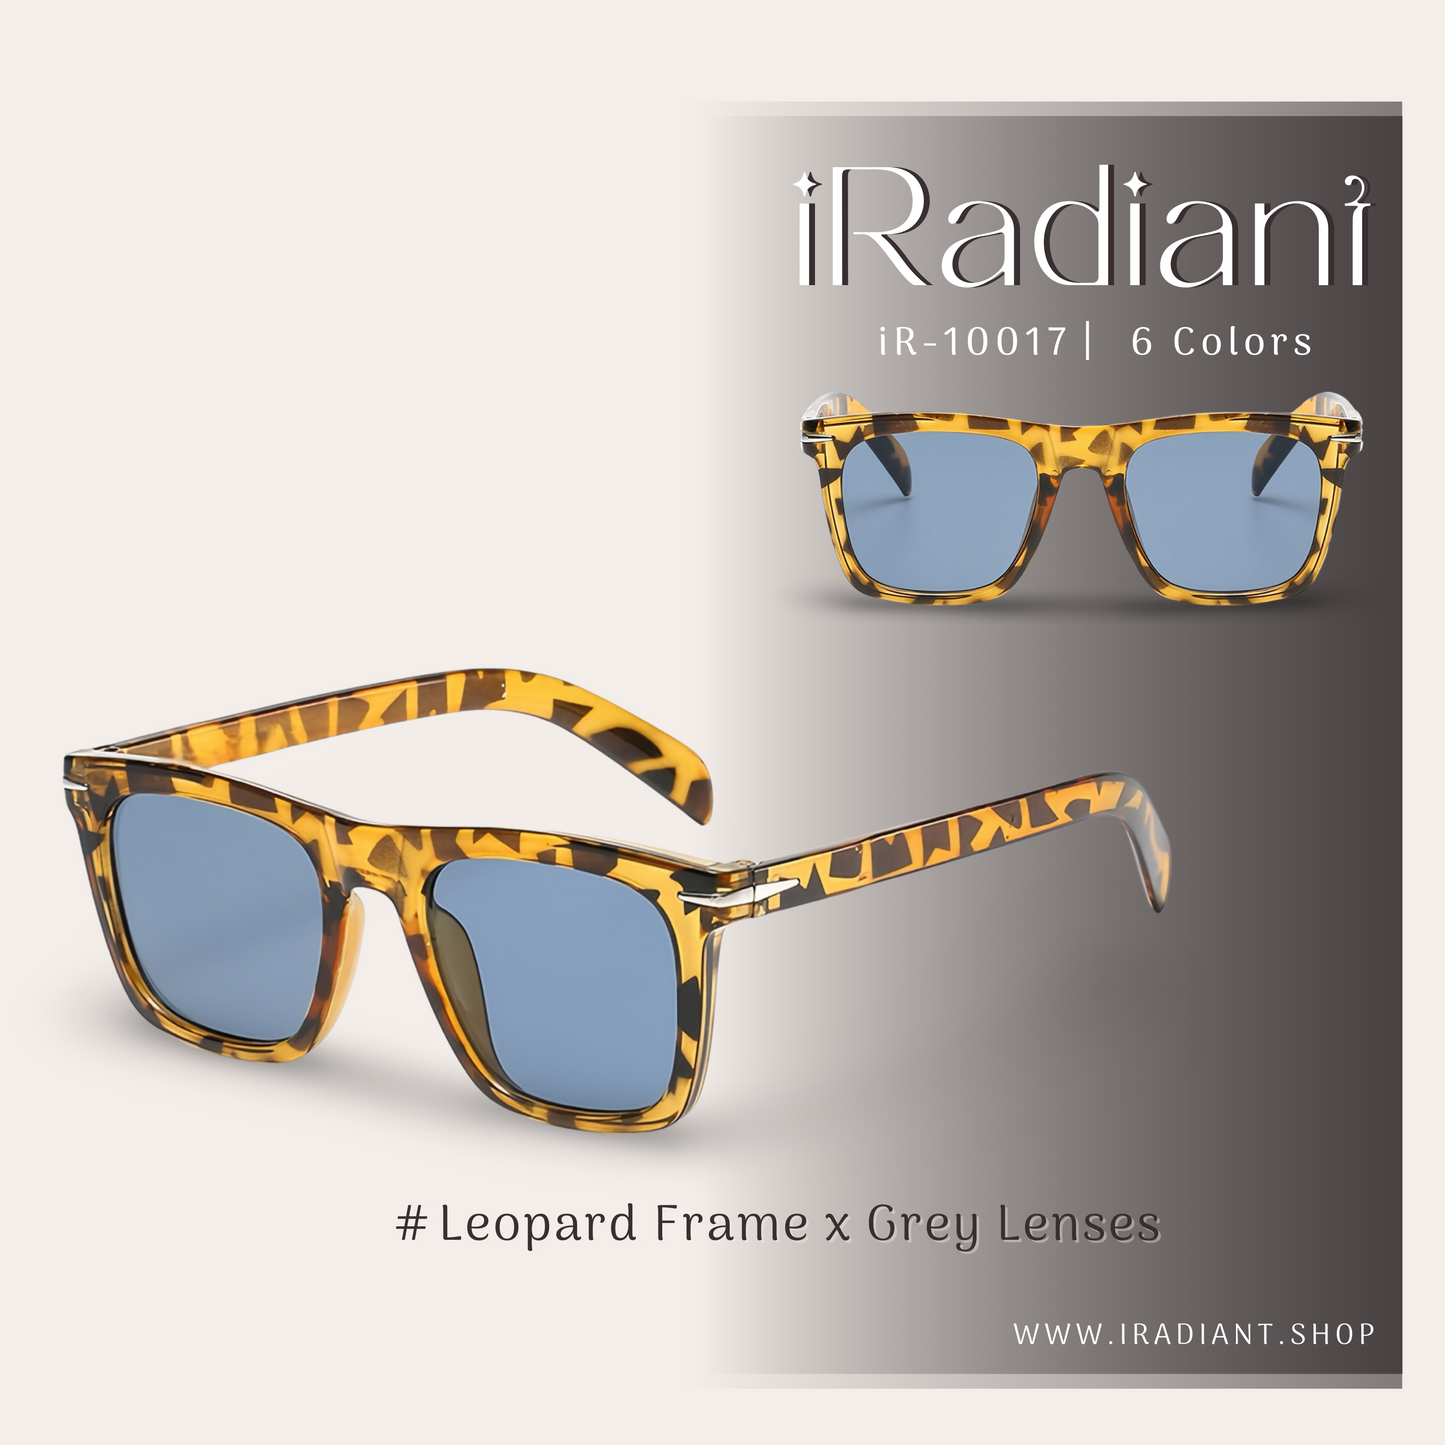 iR-10017-F ︳iRadiant Classic Retro Frame Shades  ︳Unisex ︳Leopard Frame x Grey Lenses .